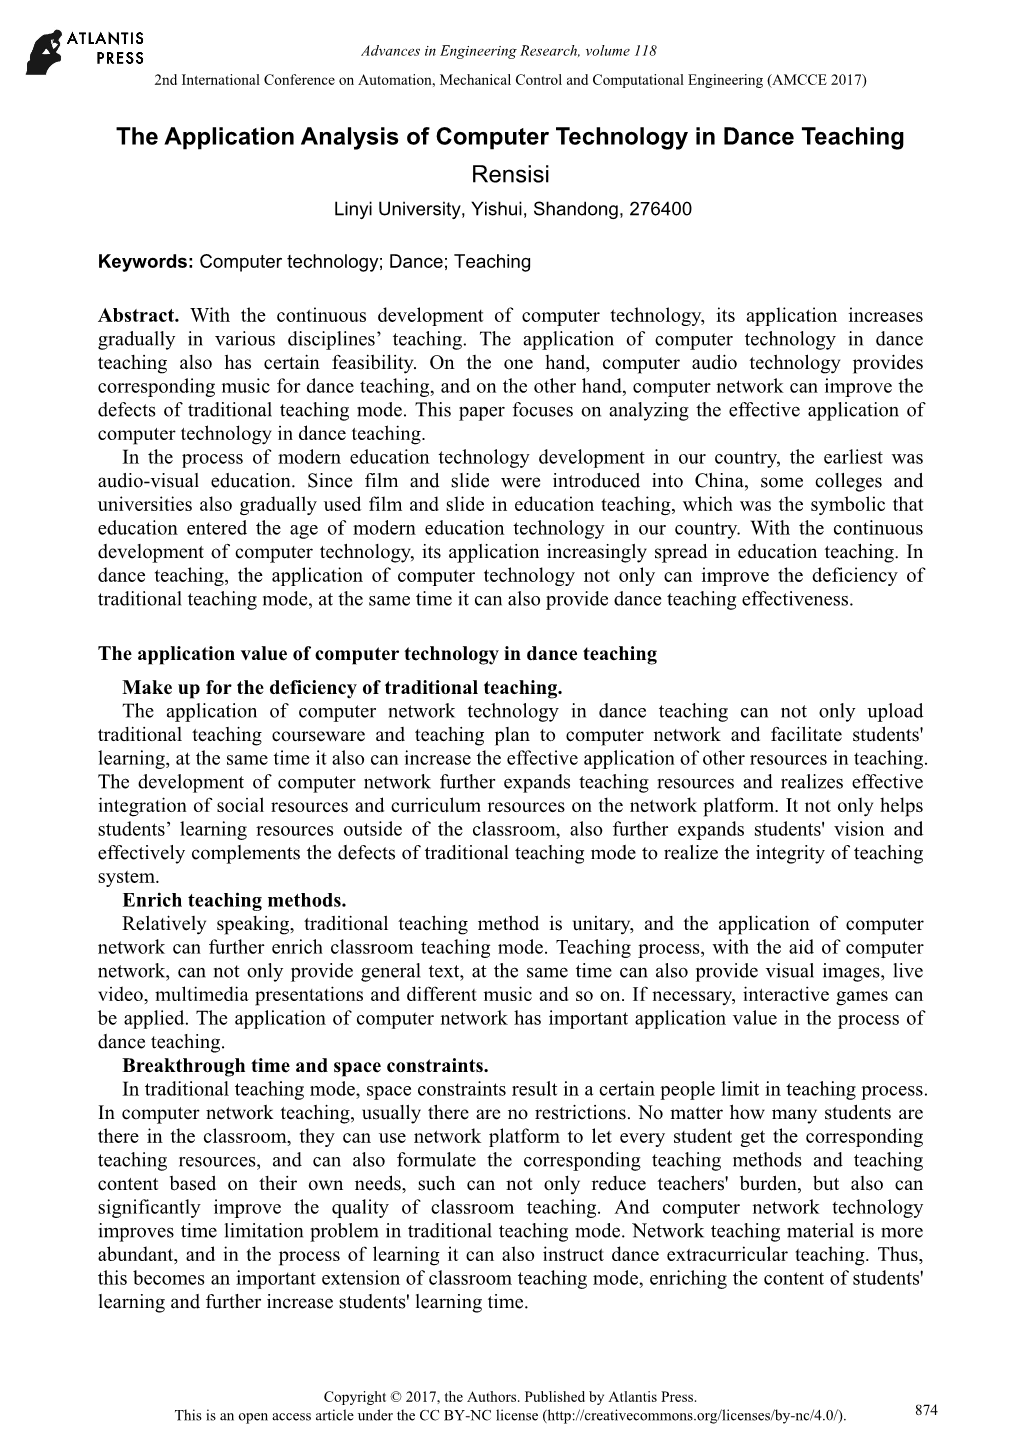 The Application Analysis of Computer Technology in Dance Teaching Rensisi Linyi University, Yishui, Shandong, 276400